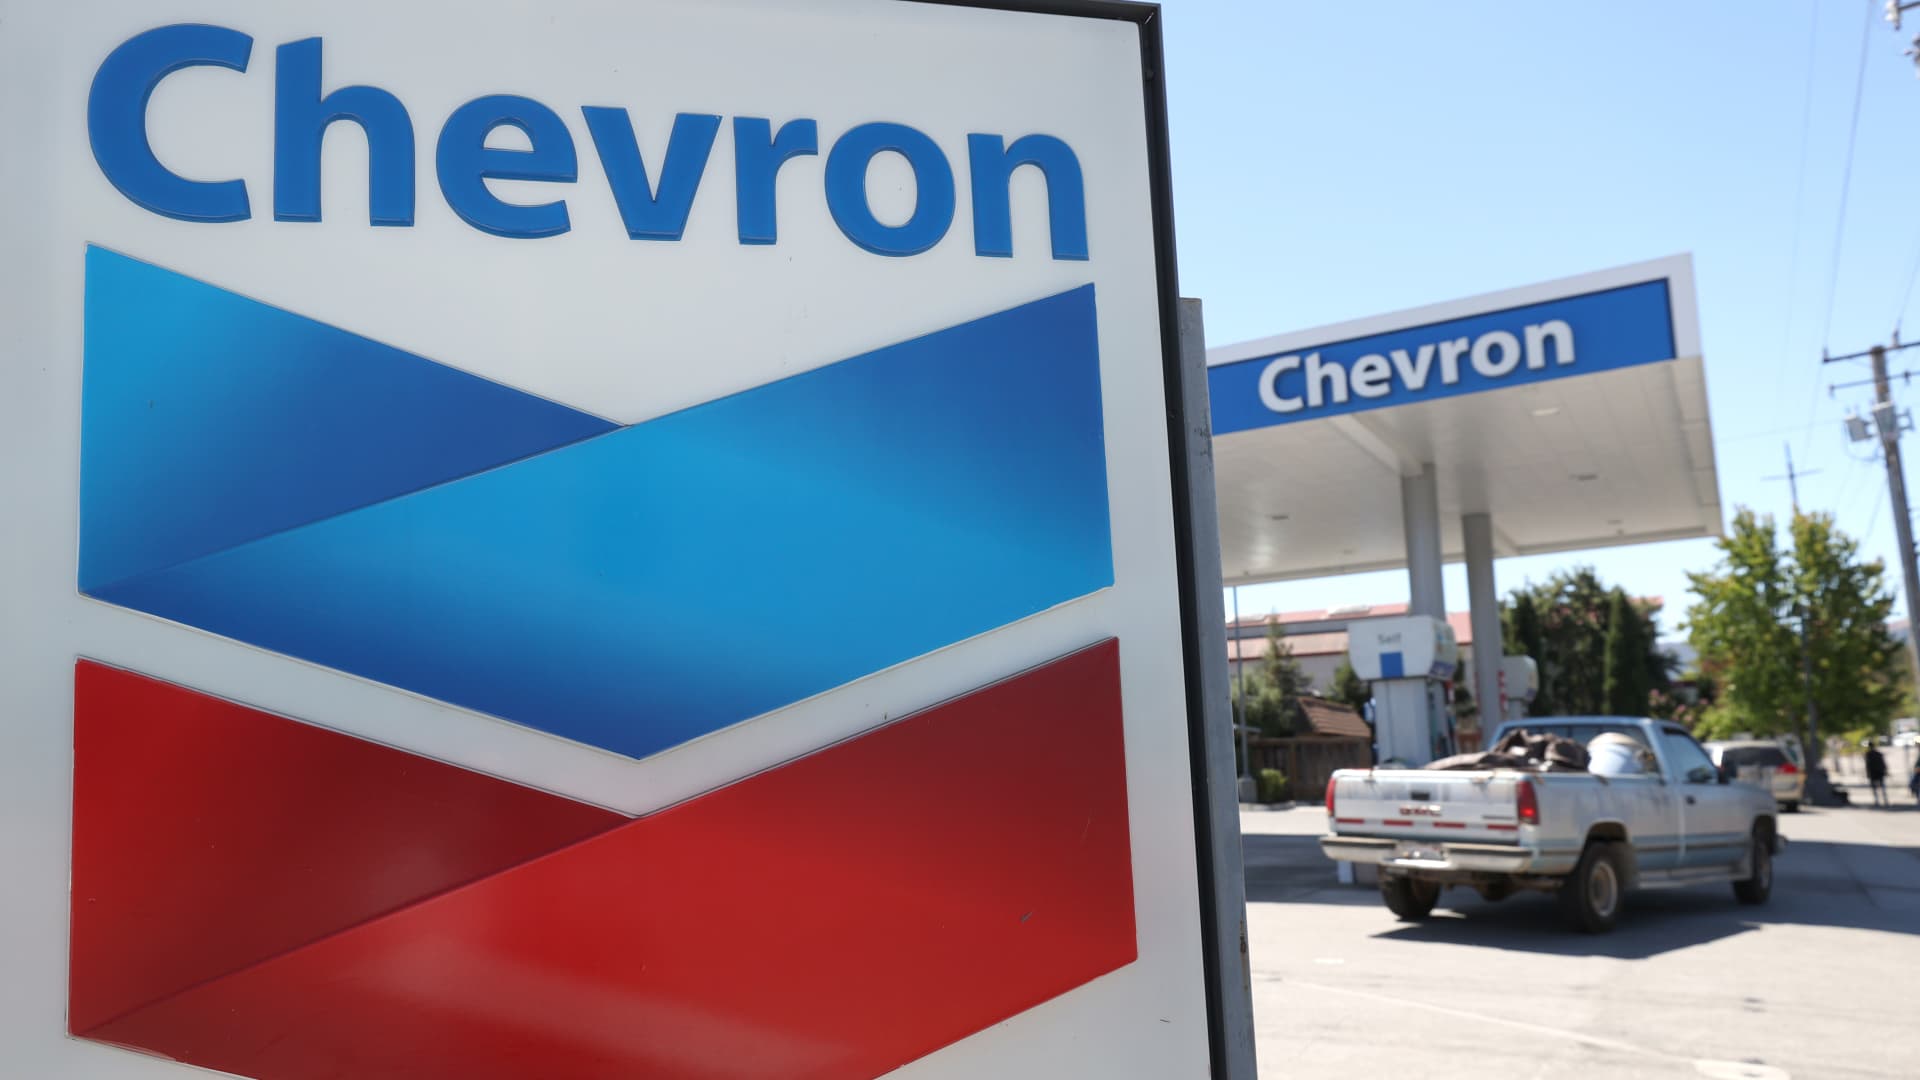 Chevron (CVX) 2022 profit doubles to record $36.5 billion